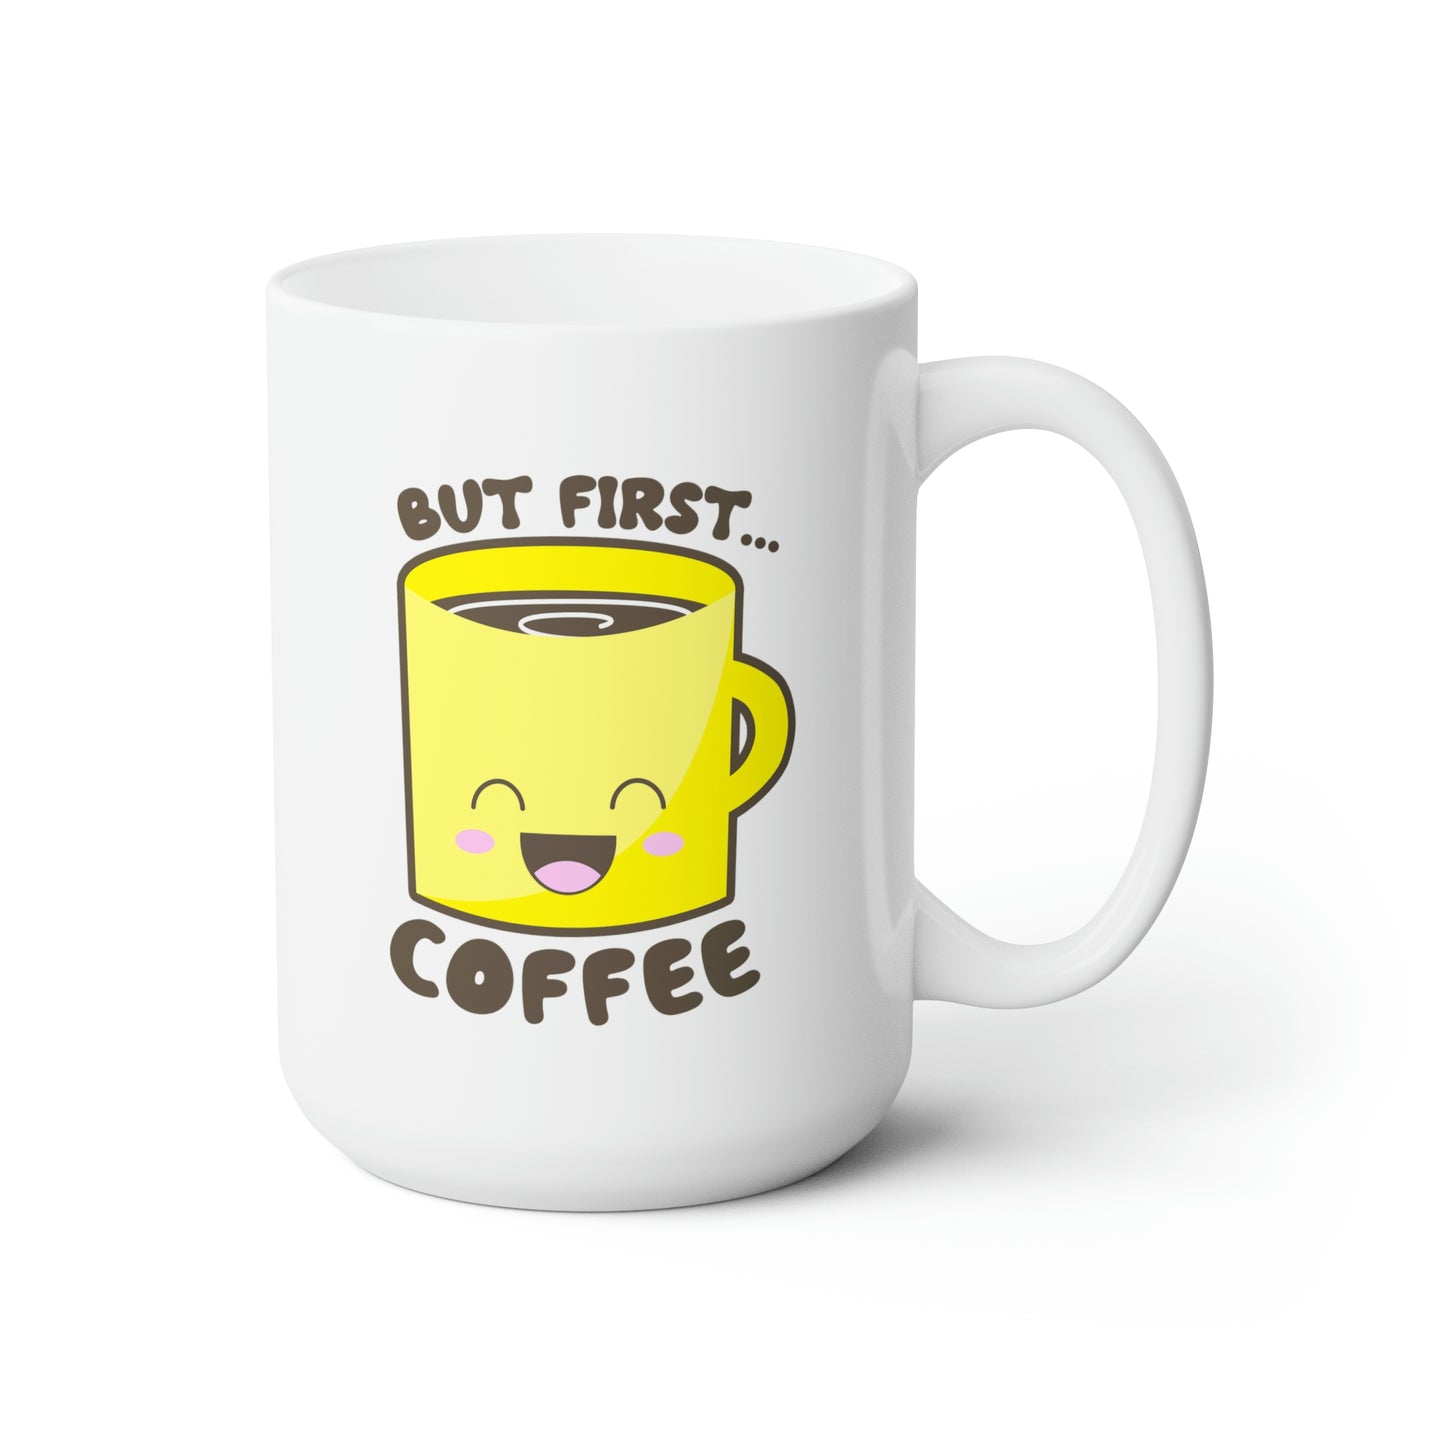 But First Coffee Mugs Ceramic Mug 15oz